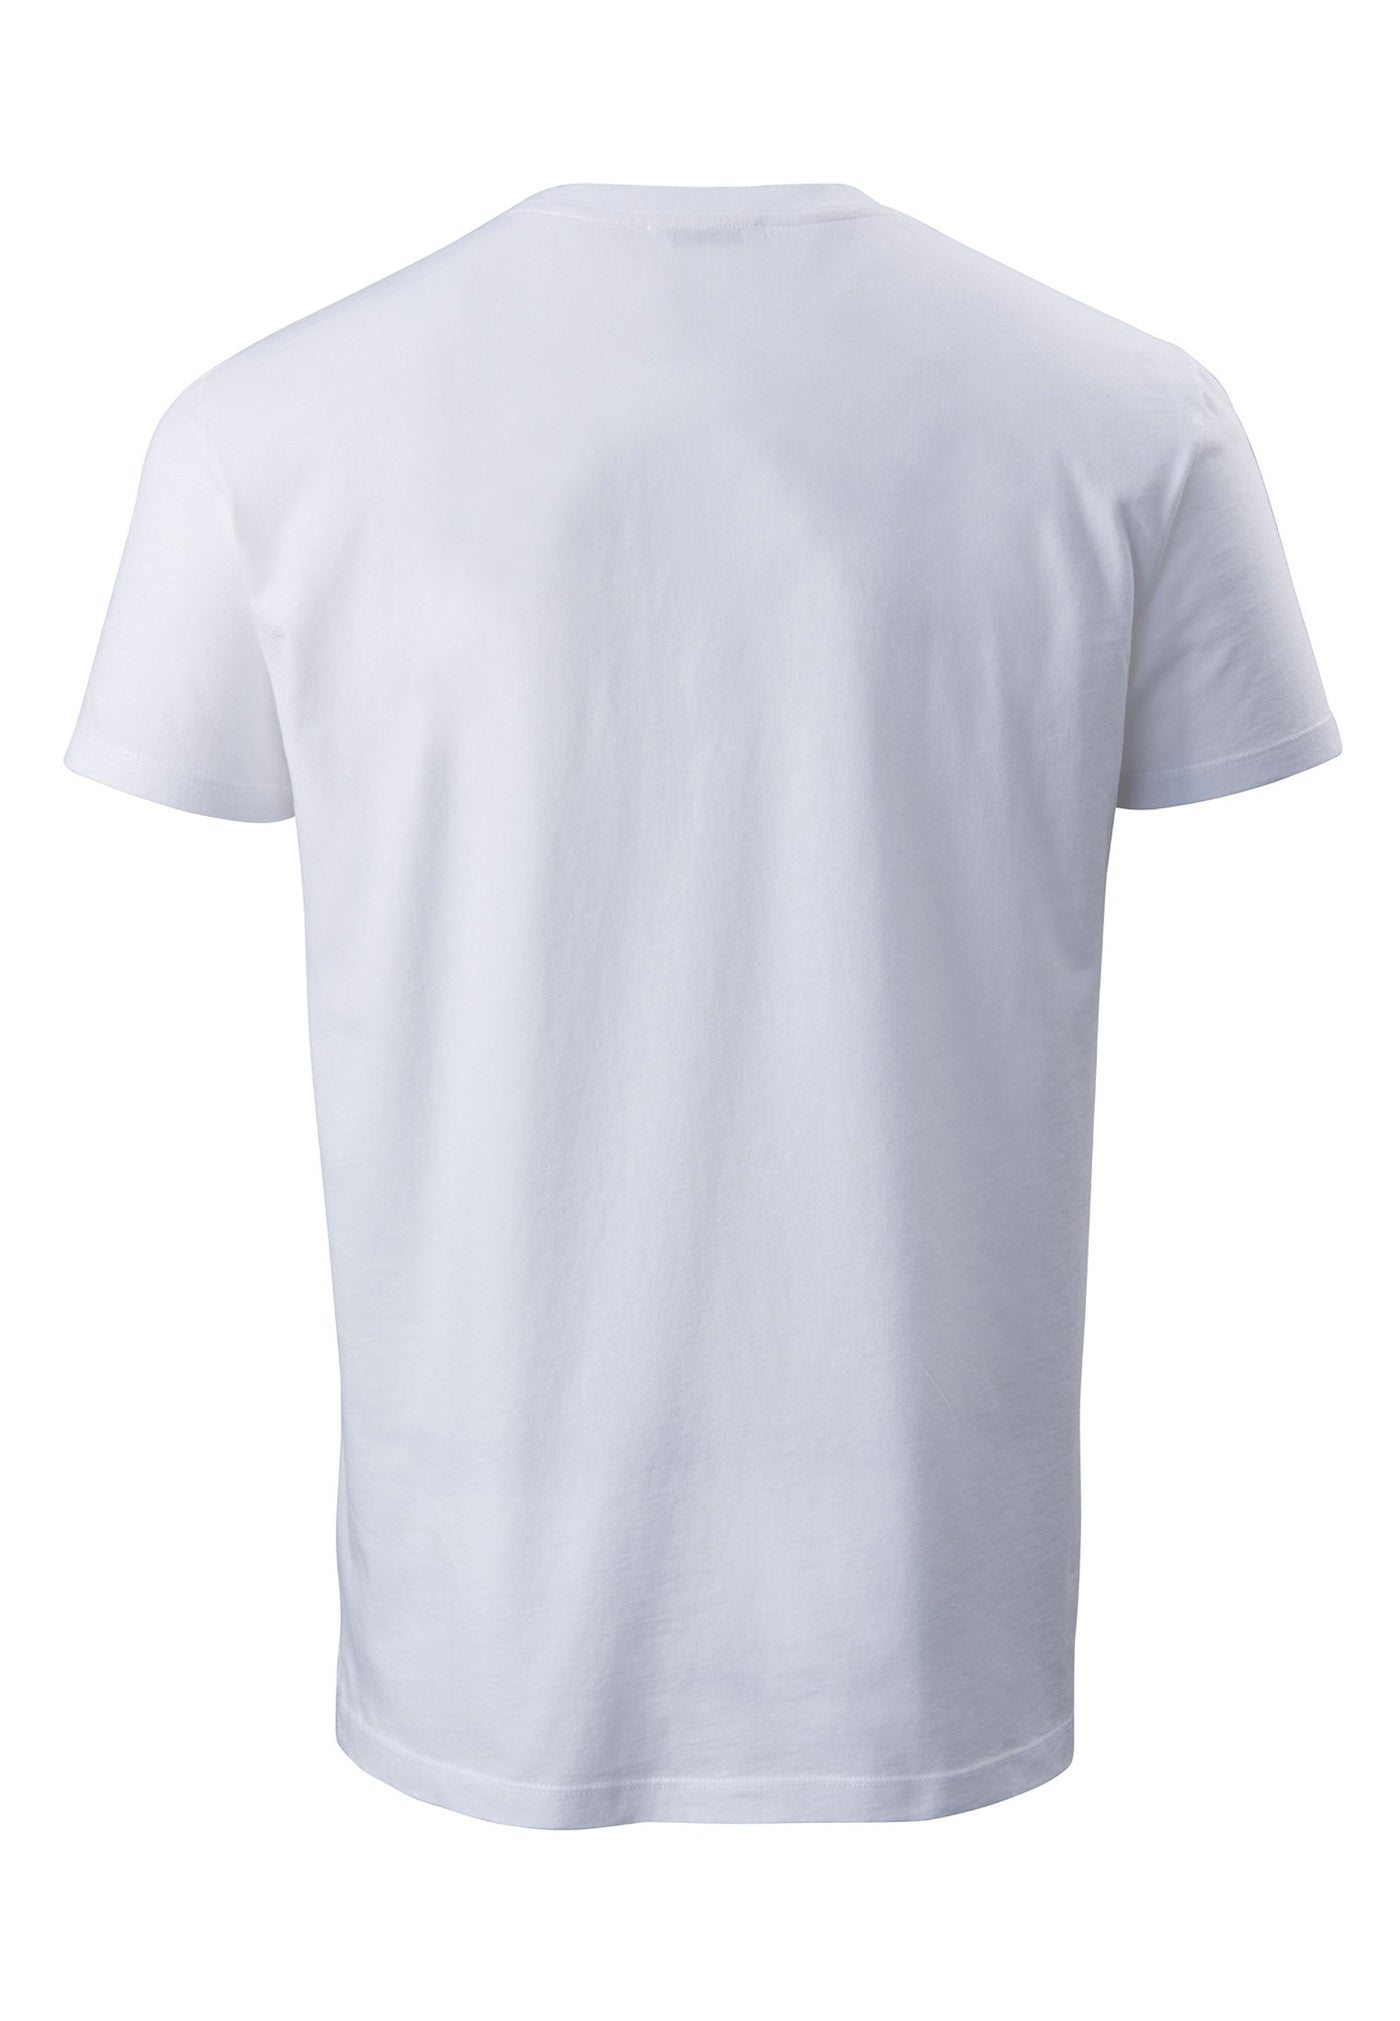 The Round Neck T-Shirt